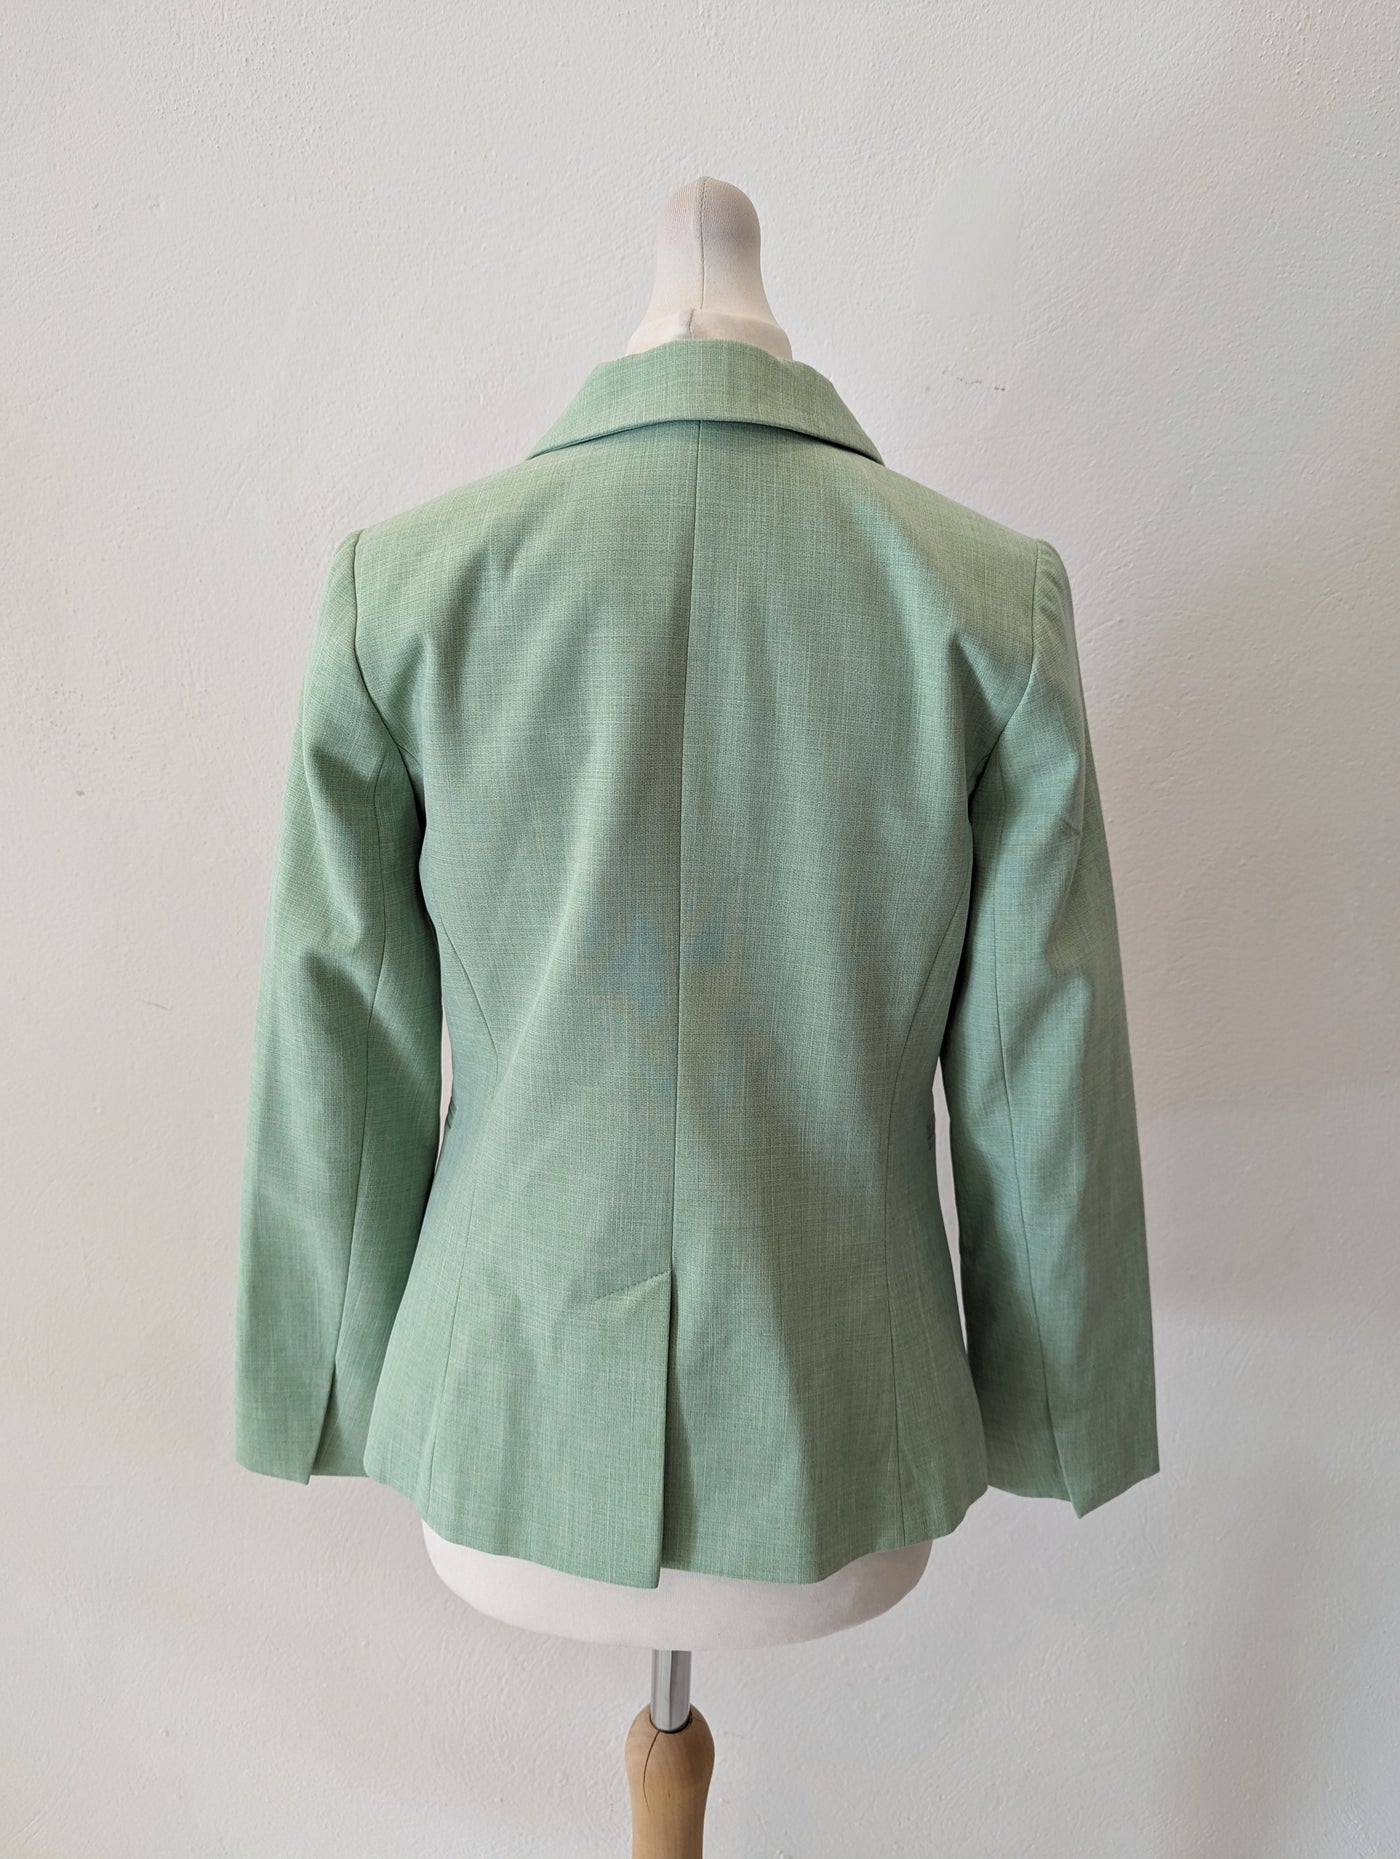 Miss Selfridge Green Trouser Suit 6P